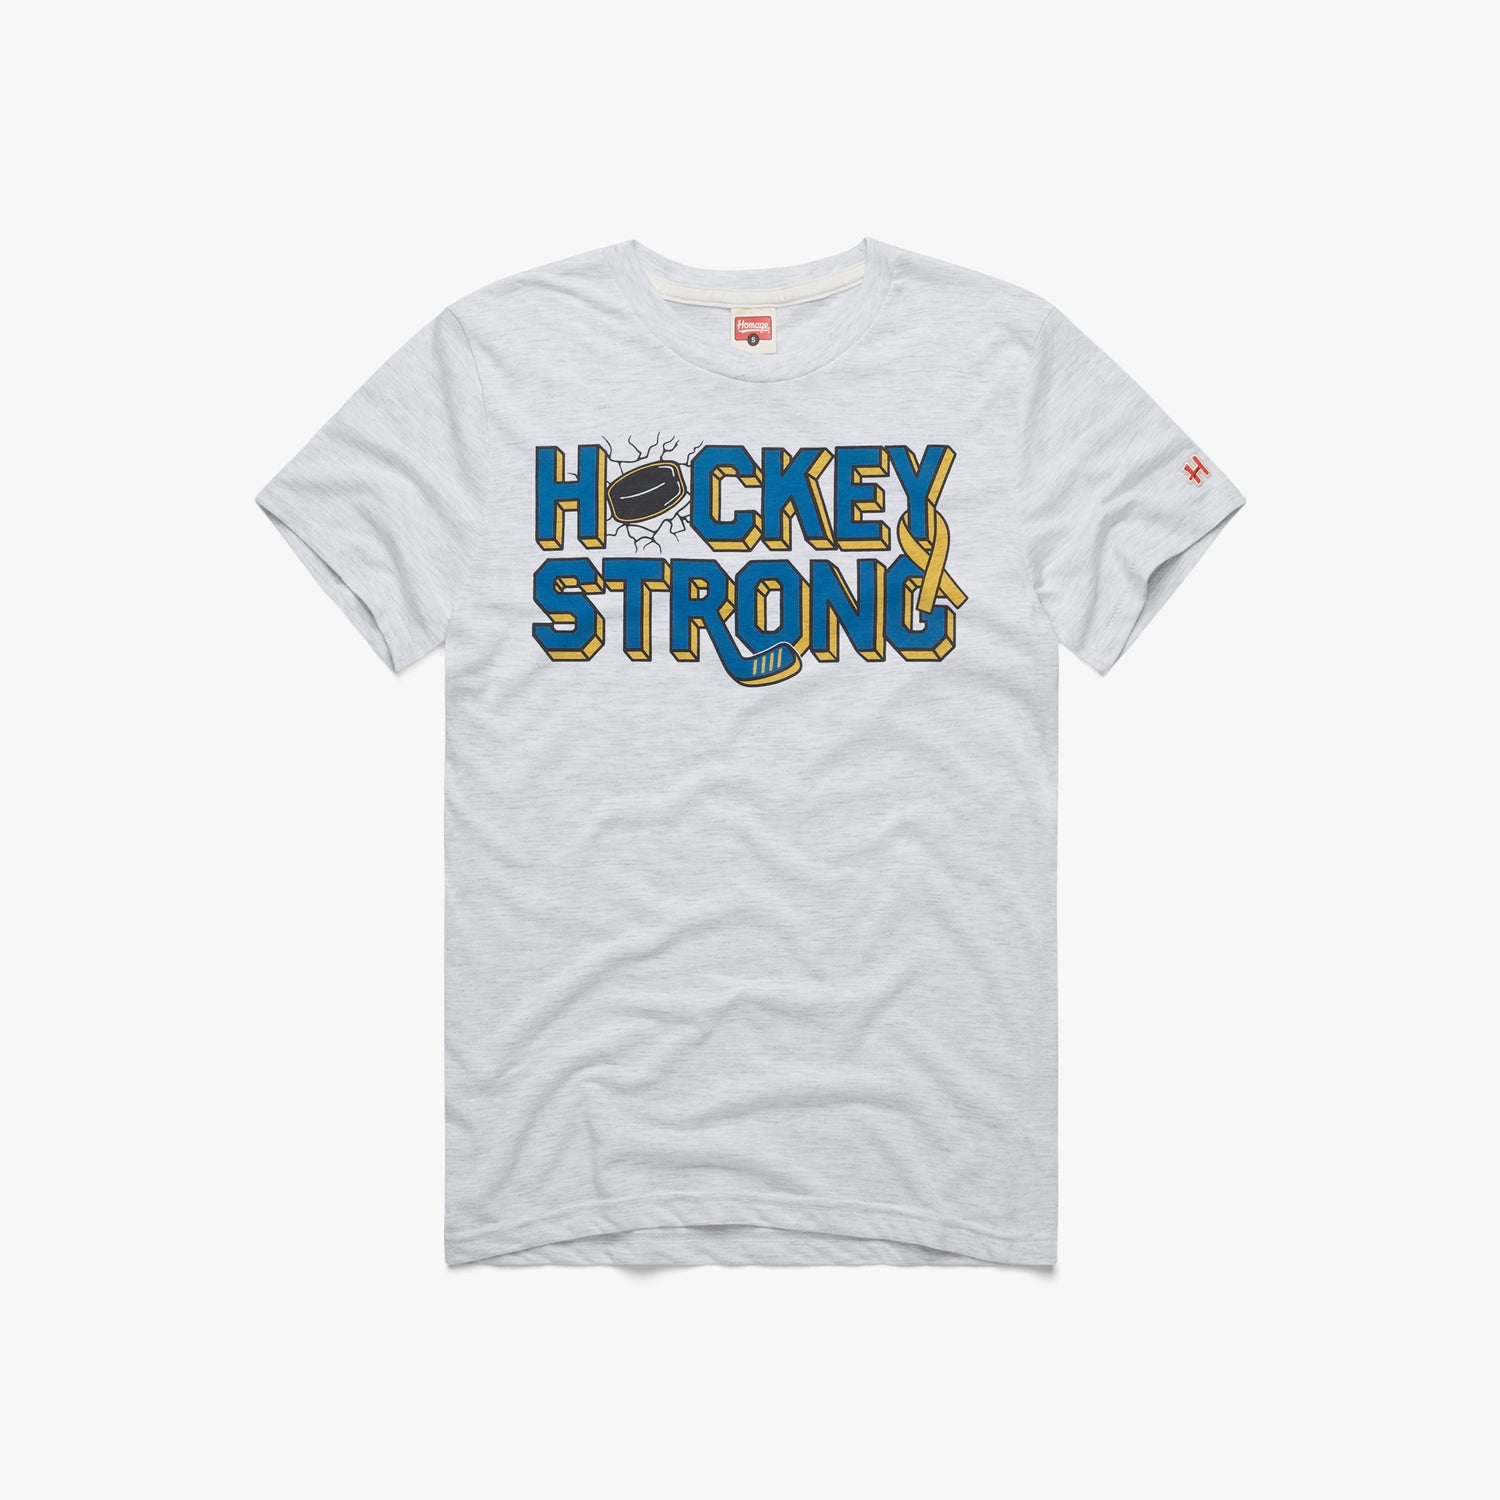 Hockey Strong